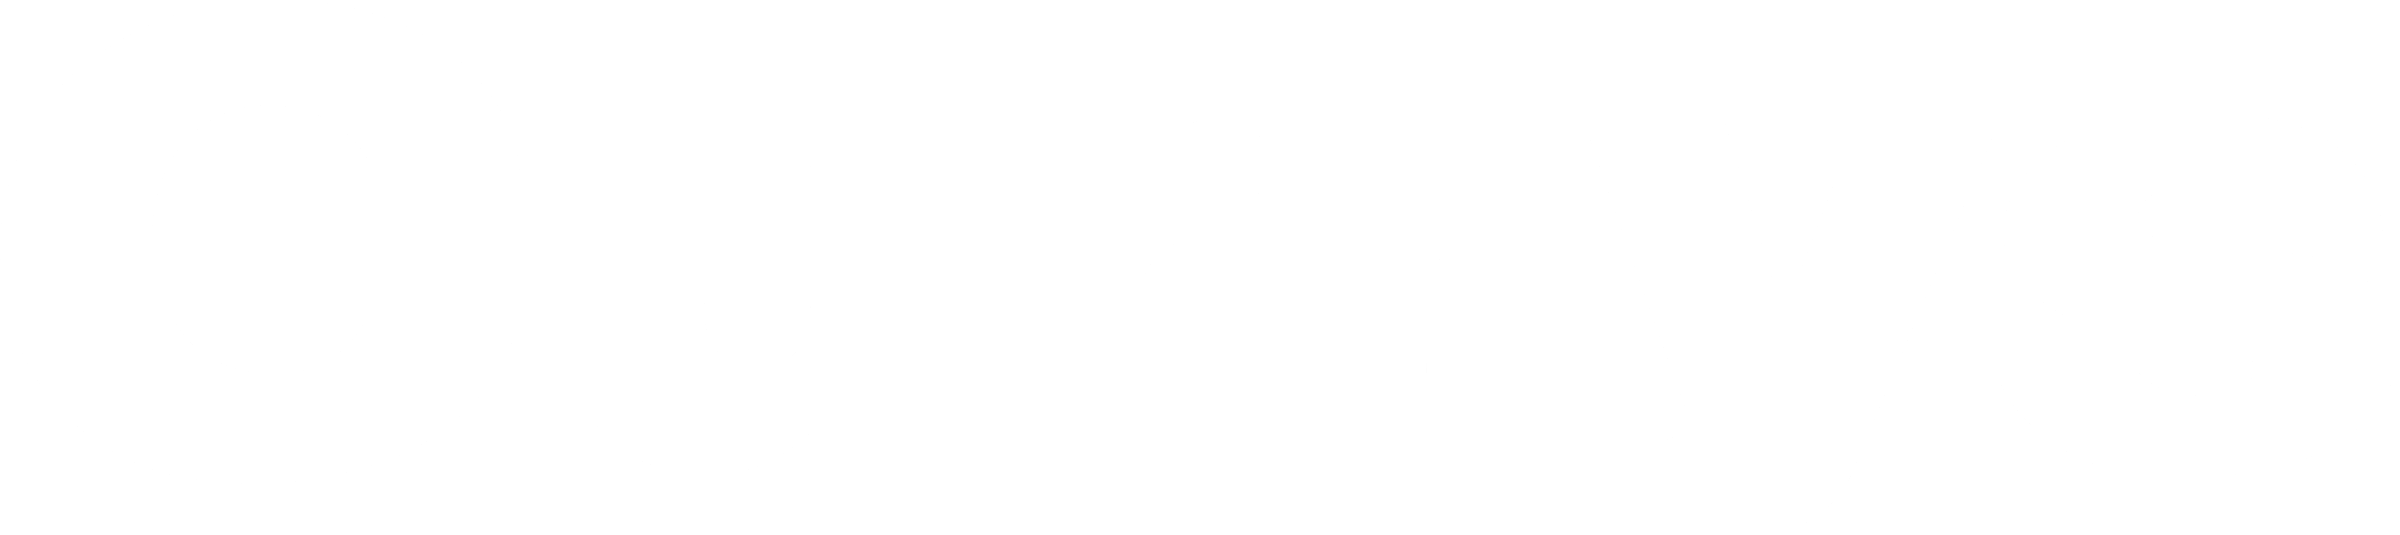 https://macfarlanepackaging.com/wp-content/uploads/2017/09/currys-logo-logo-black-and-white.png